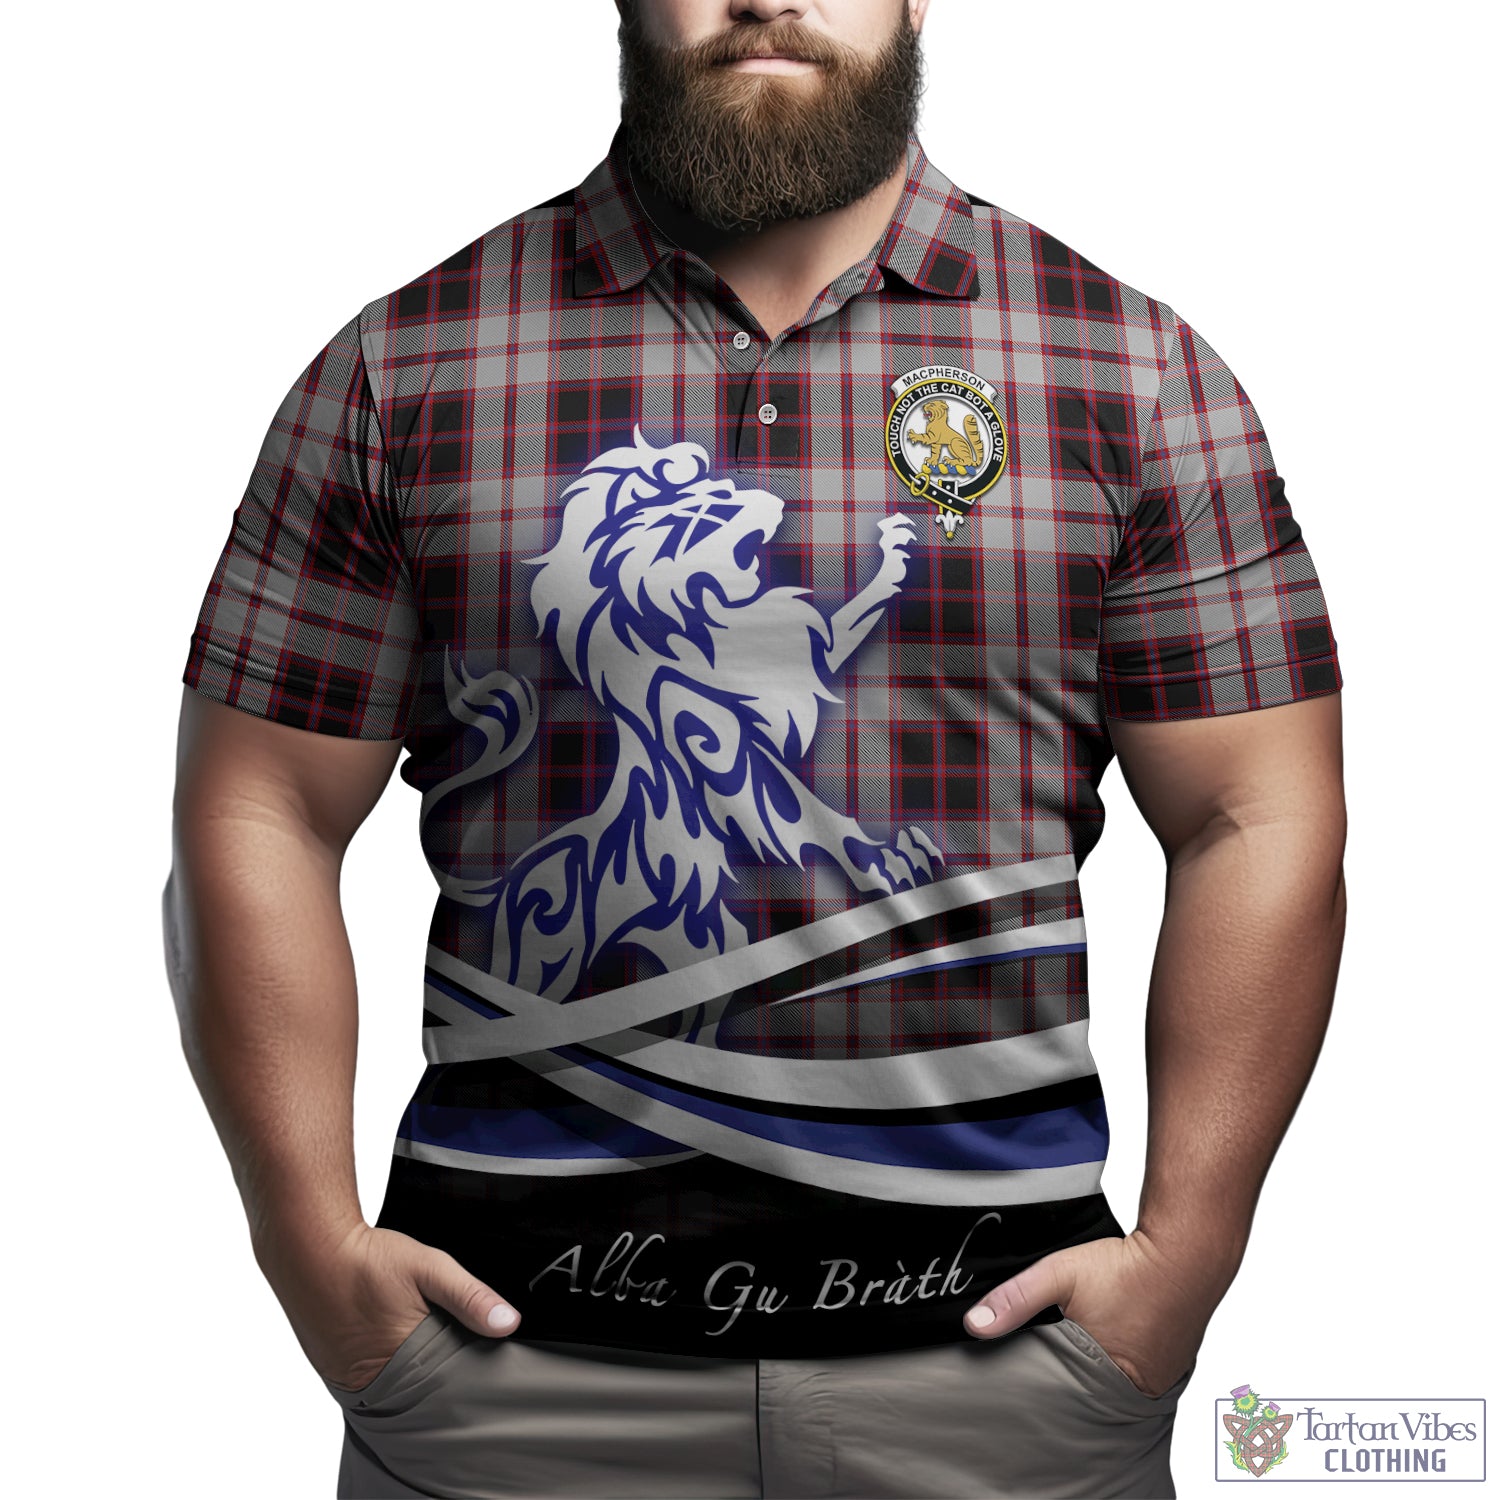 macpherson-tartan-polo-shirt-with-alba-gu-brath-regal-lion-emblem